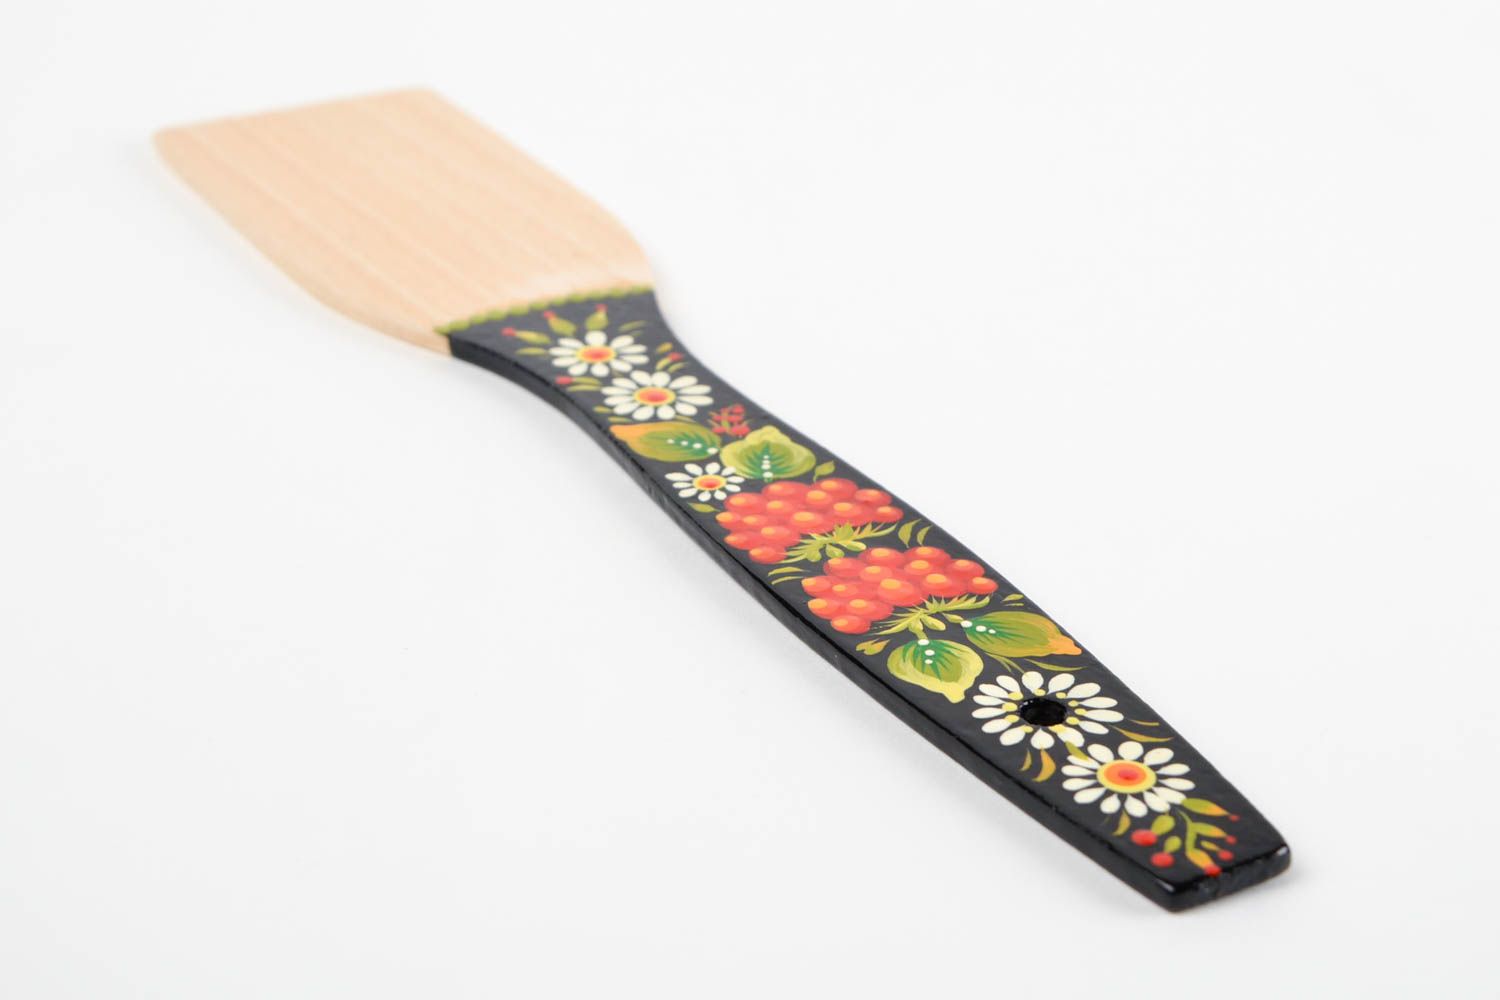 Handmade painted wooden spatula wood craft kitchen supplies interior decorating photo 4